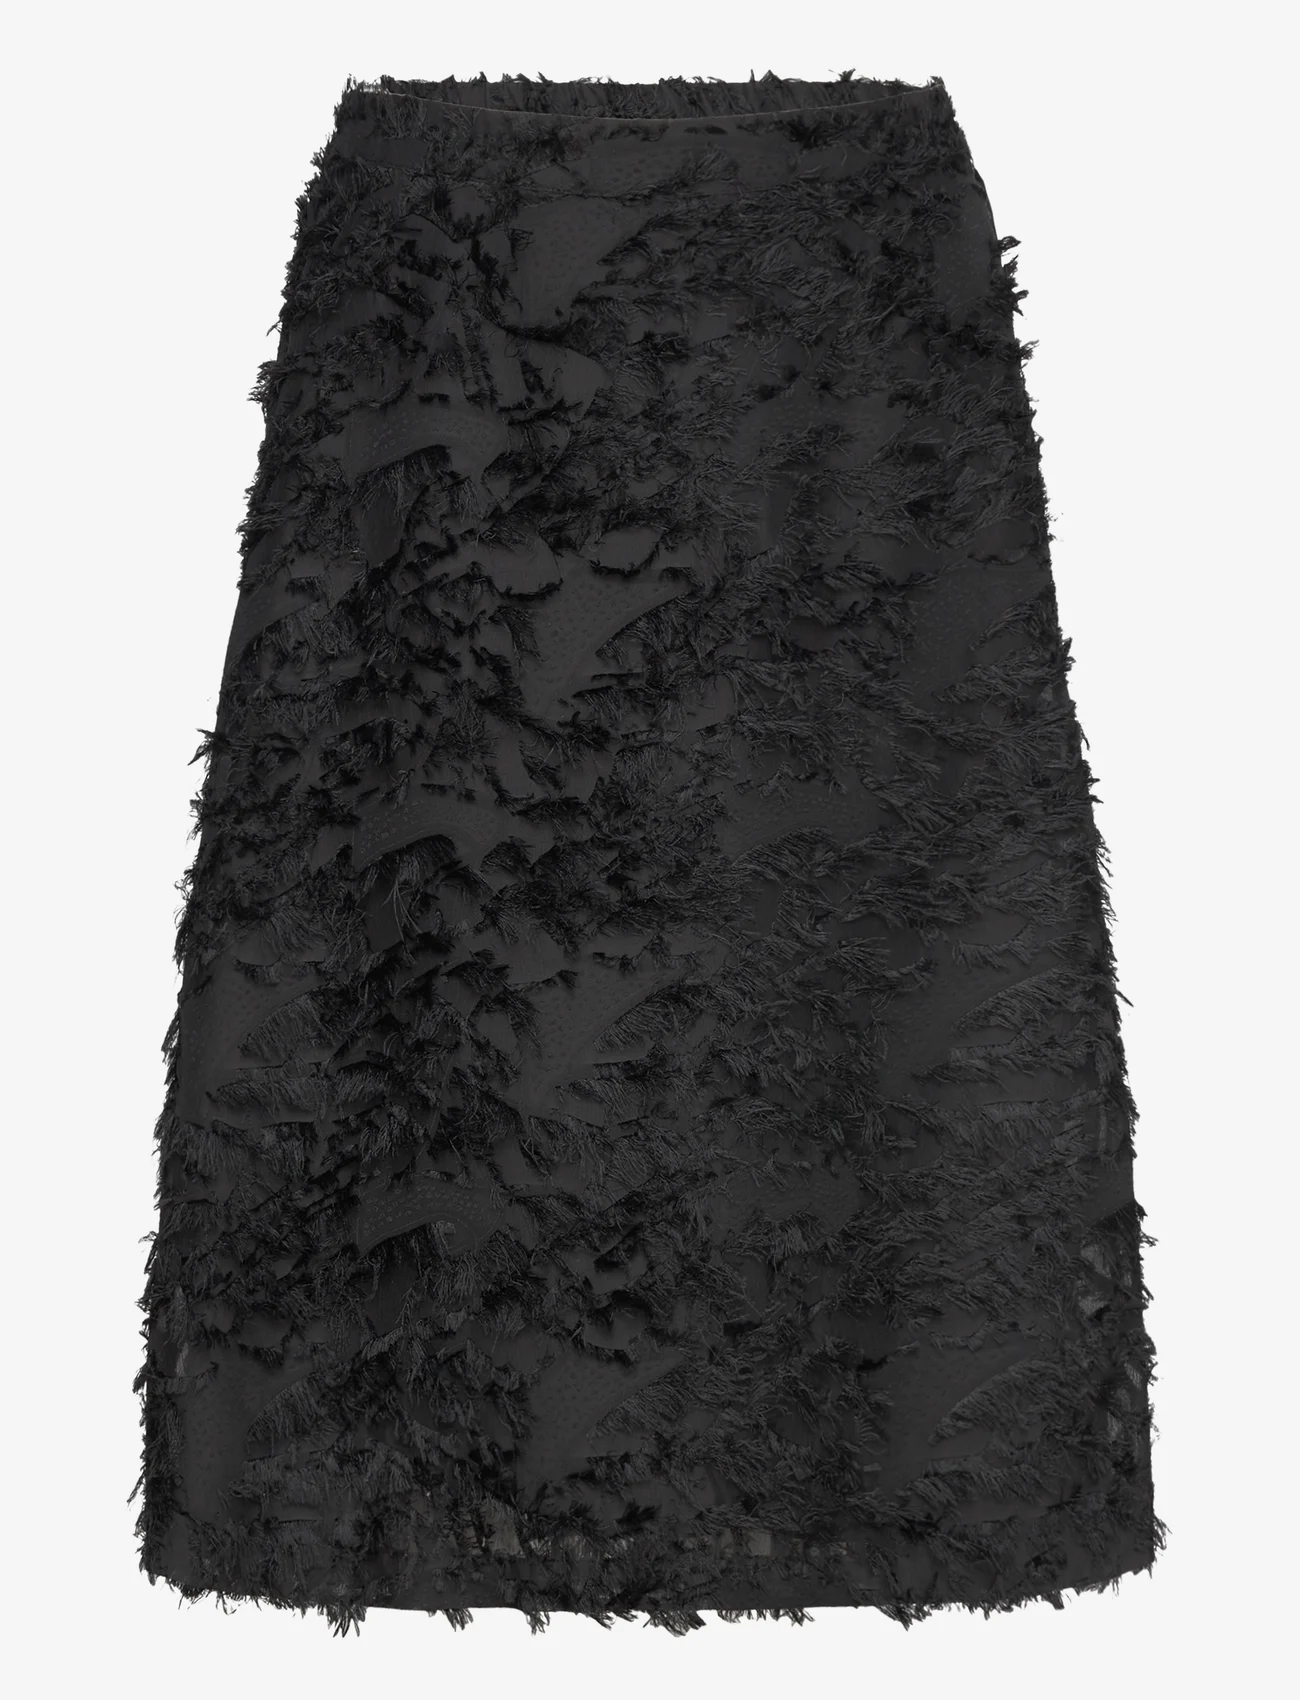 Soaked in Luxury - SLZienna Skirt - midi kjolar - black - 0